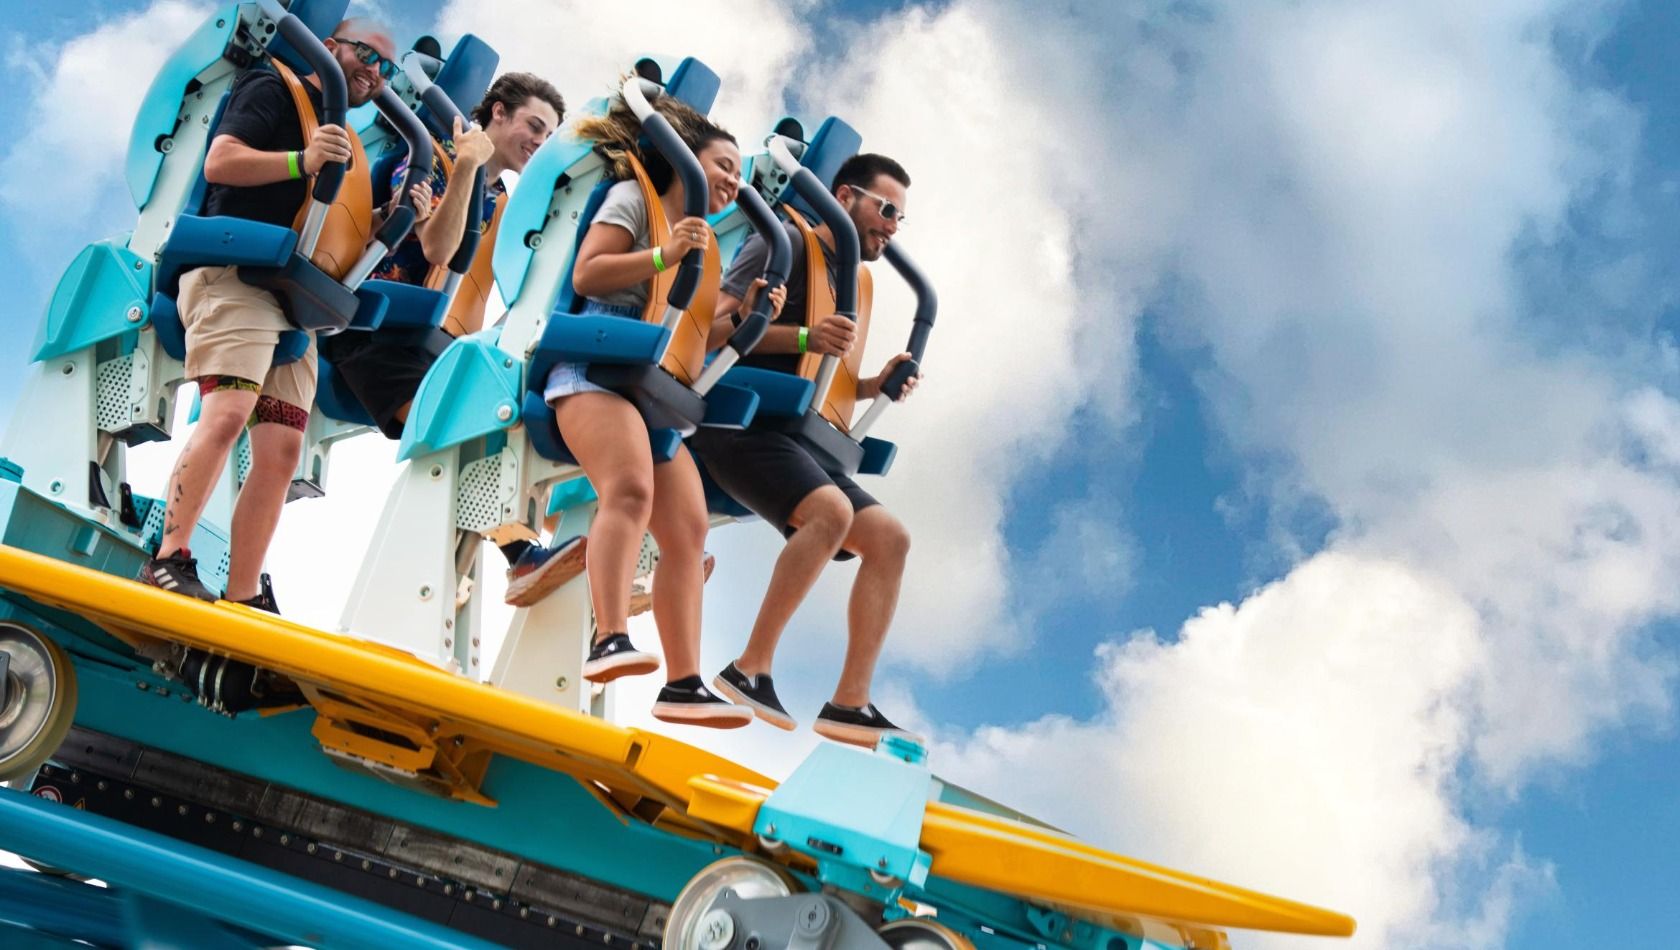 Pipeline Surf Coaster SeaWorld Orlando Stand Up Coaster